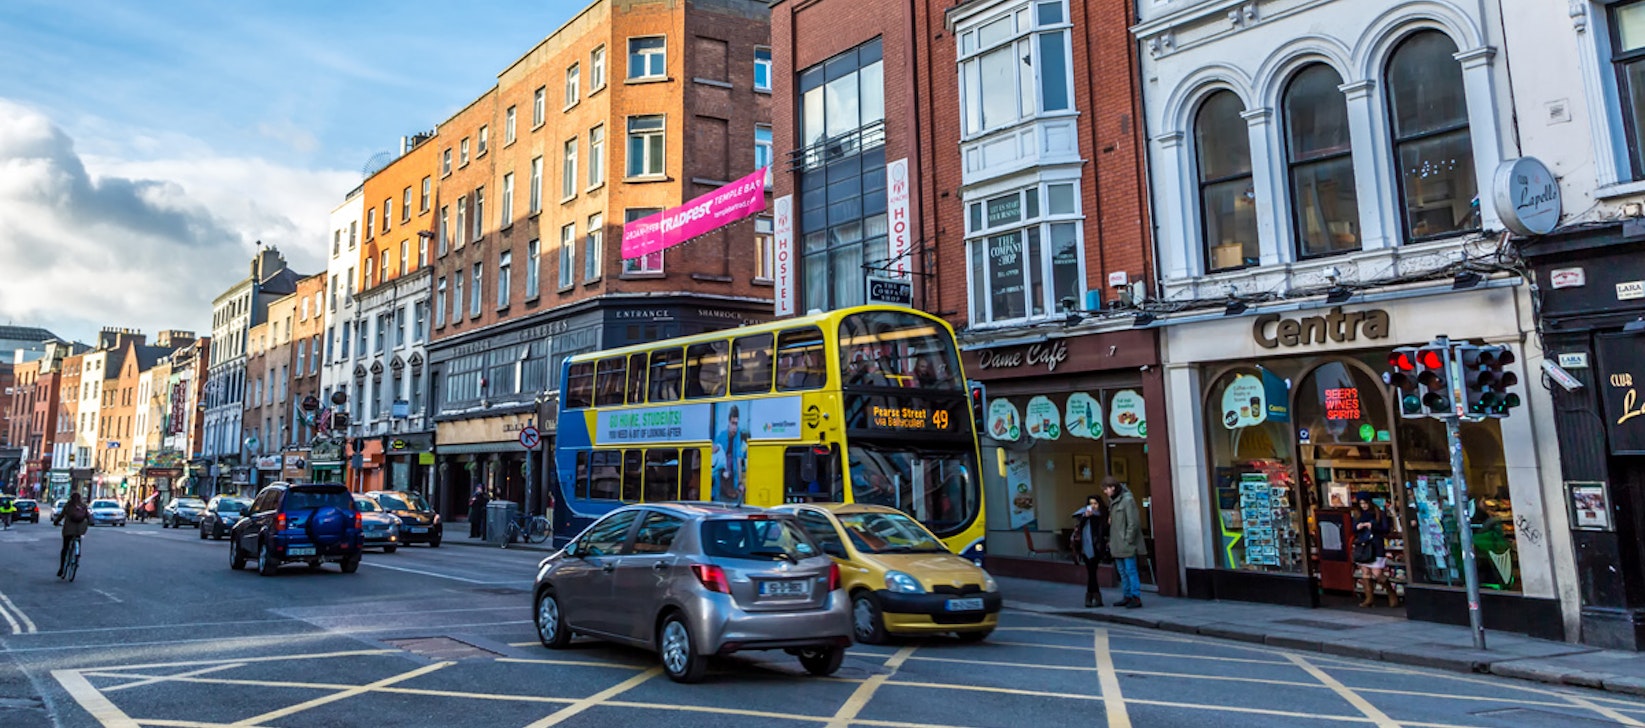 Dublin is vibrant! Confidence boosts social activity